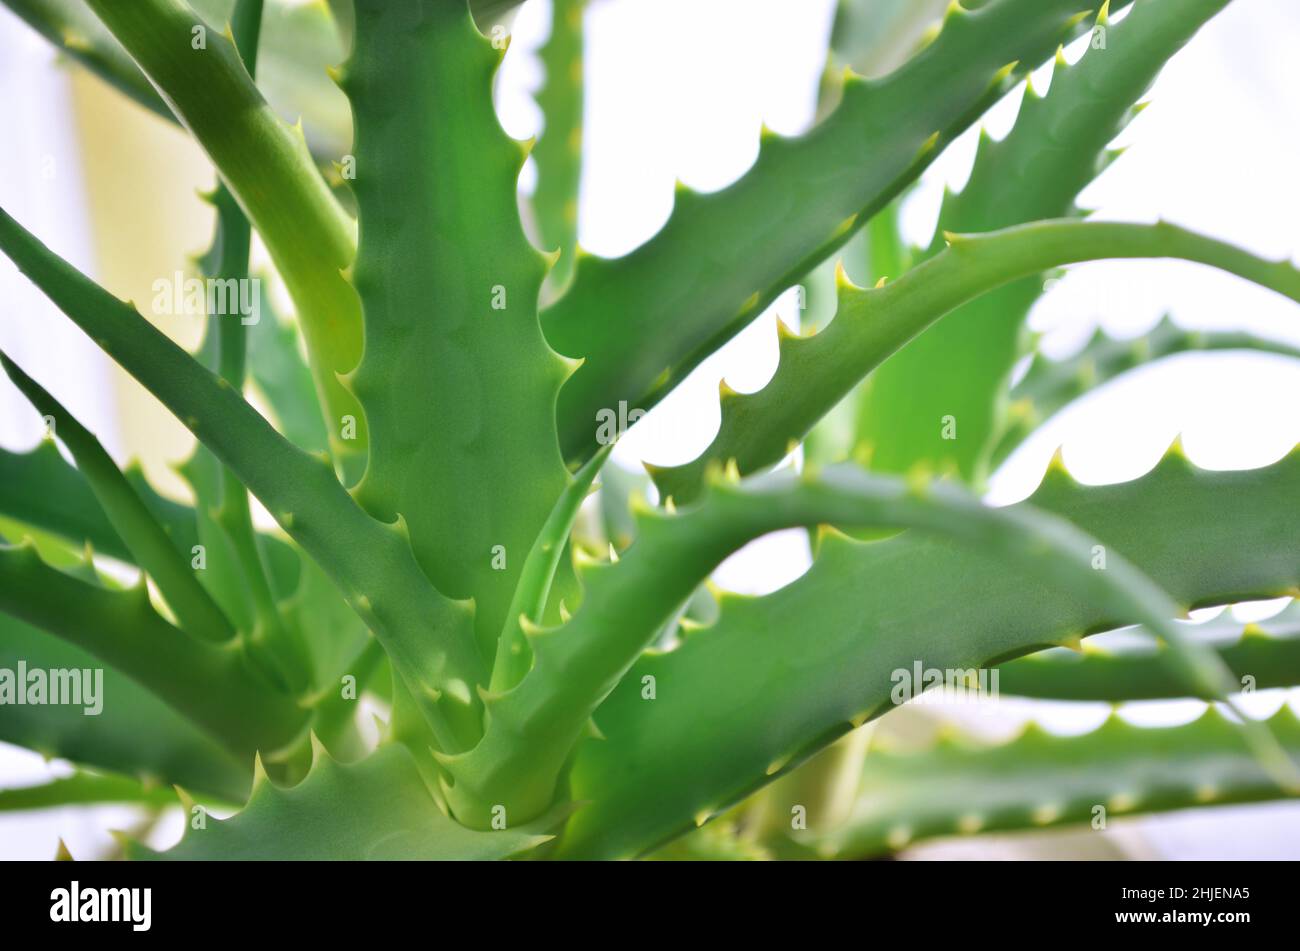 Hojas verdes con puntas de Aloe arborescens, conocidas como caloe de krantz o aloe de candelabro. Planta medicinal útil. Foto de stock